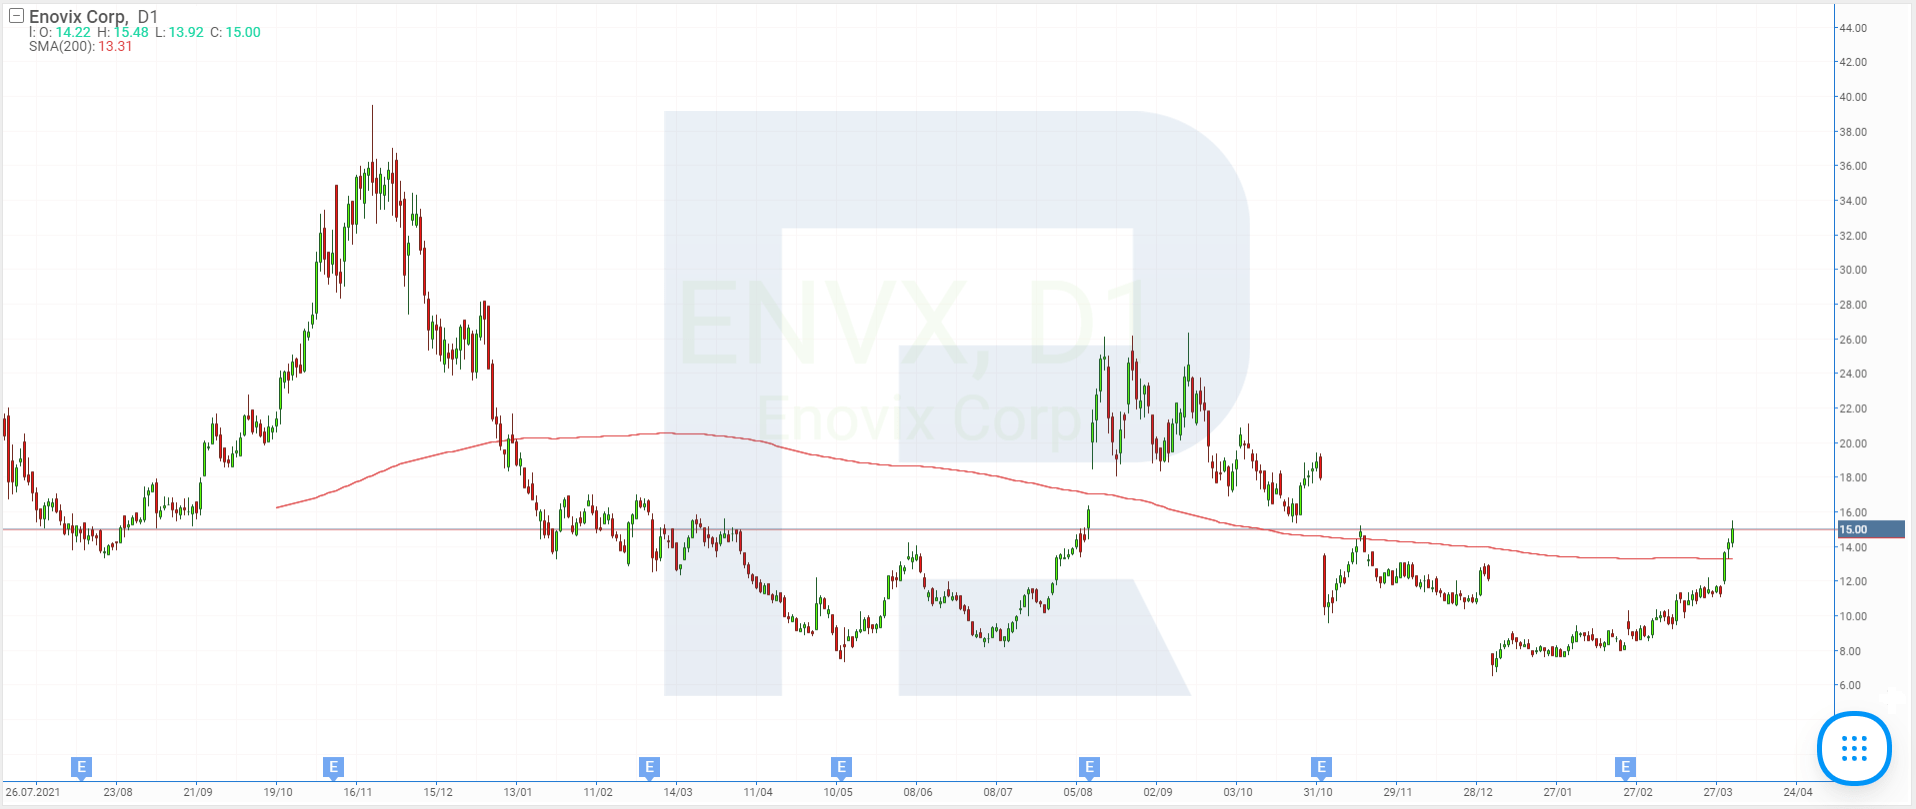 Stock price charts of Enovix Corporation